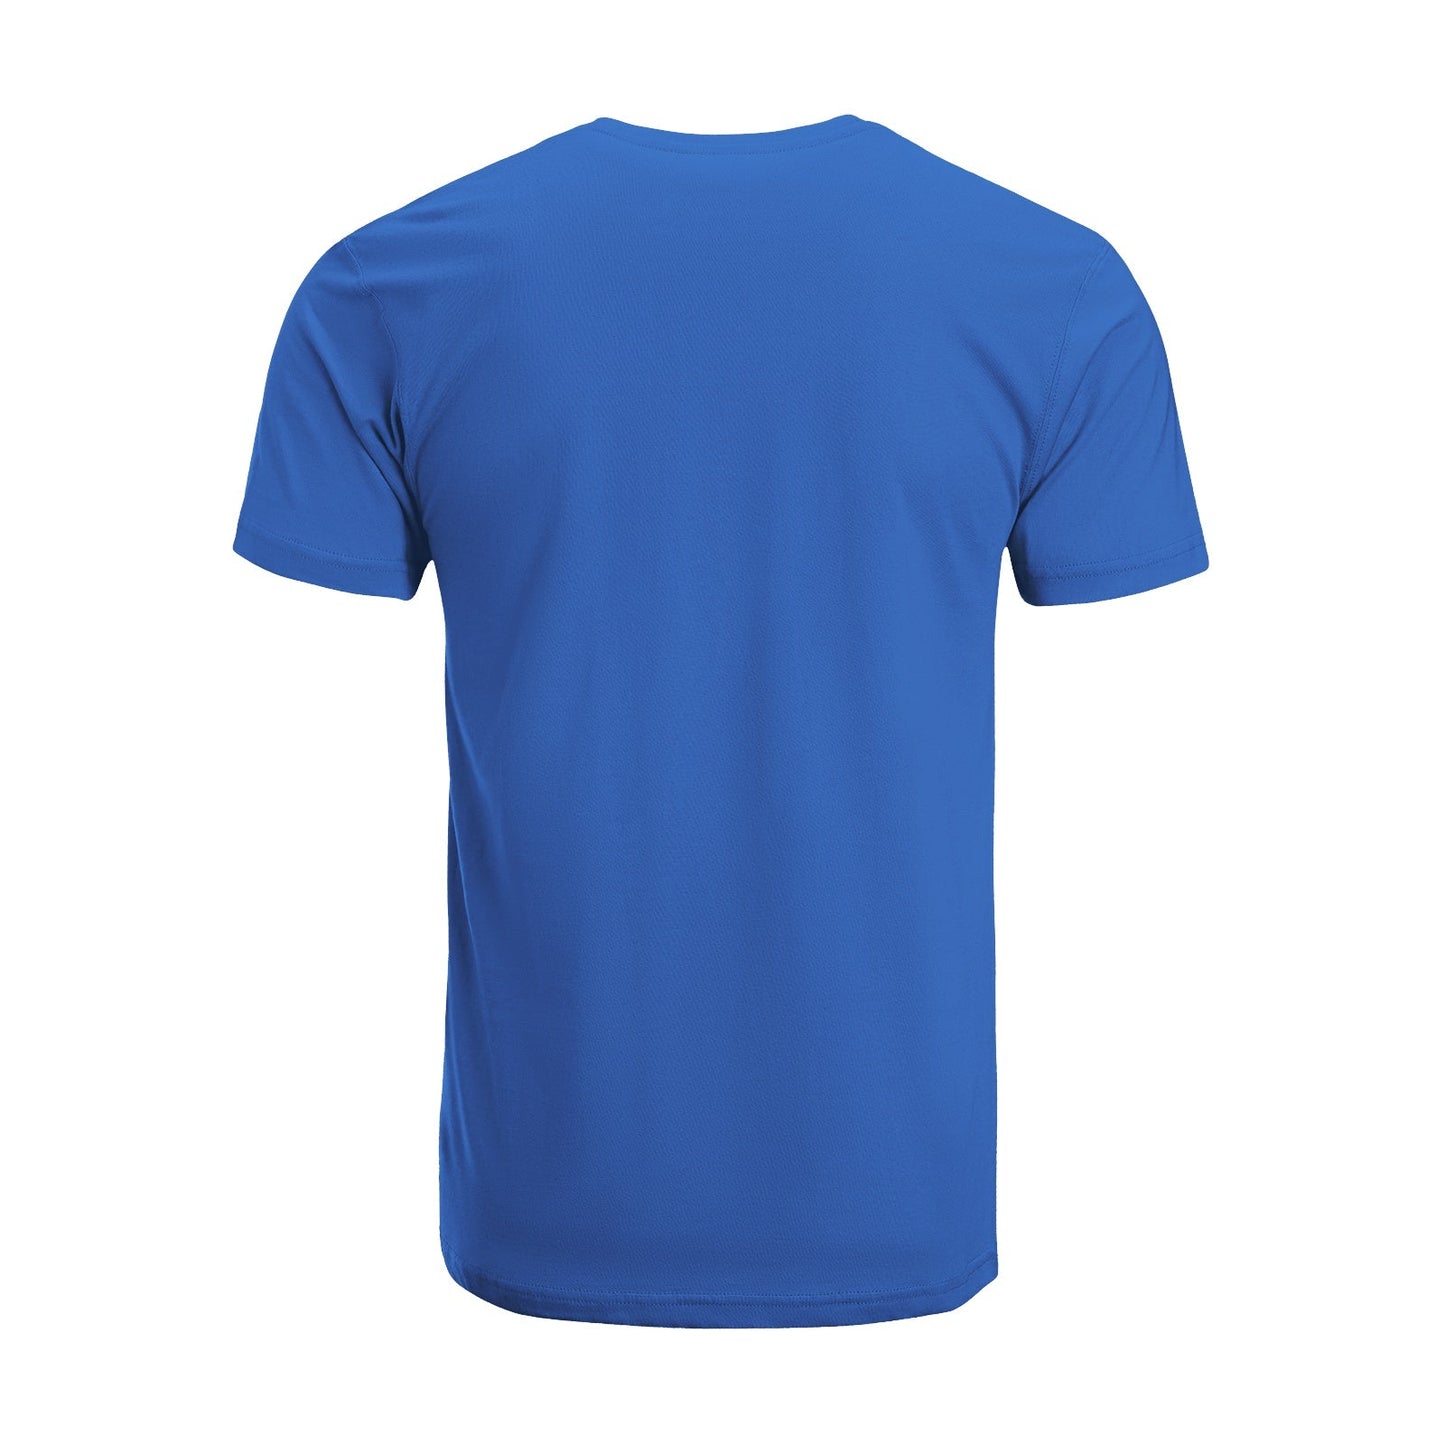 Unisex Short Sleeve Crew Neck Cotton Jersey T-Shirt USA 14